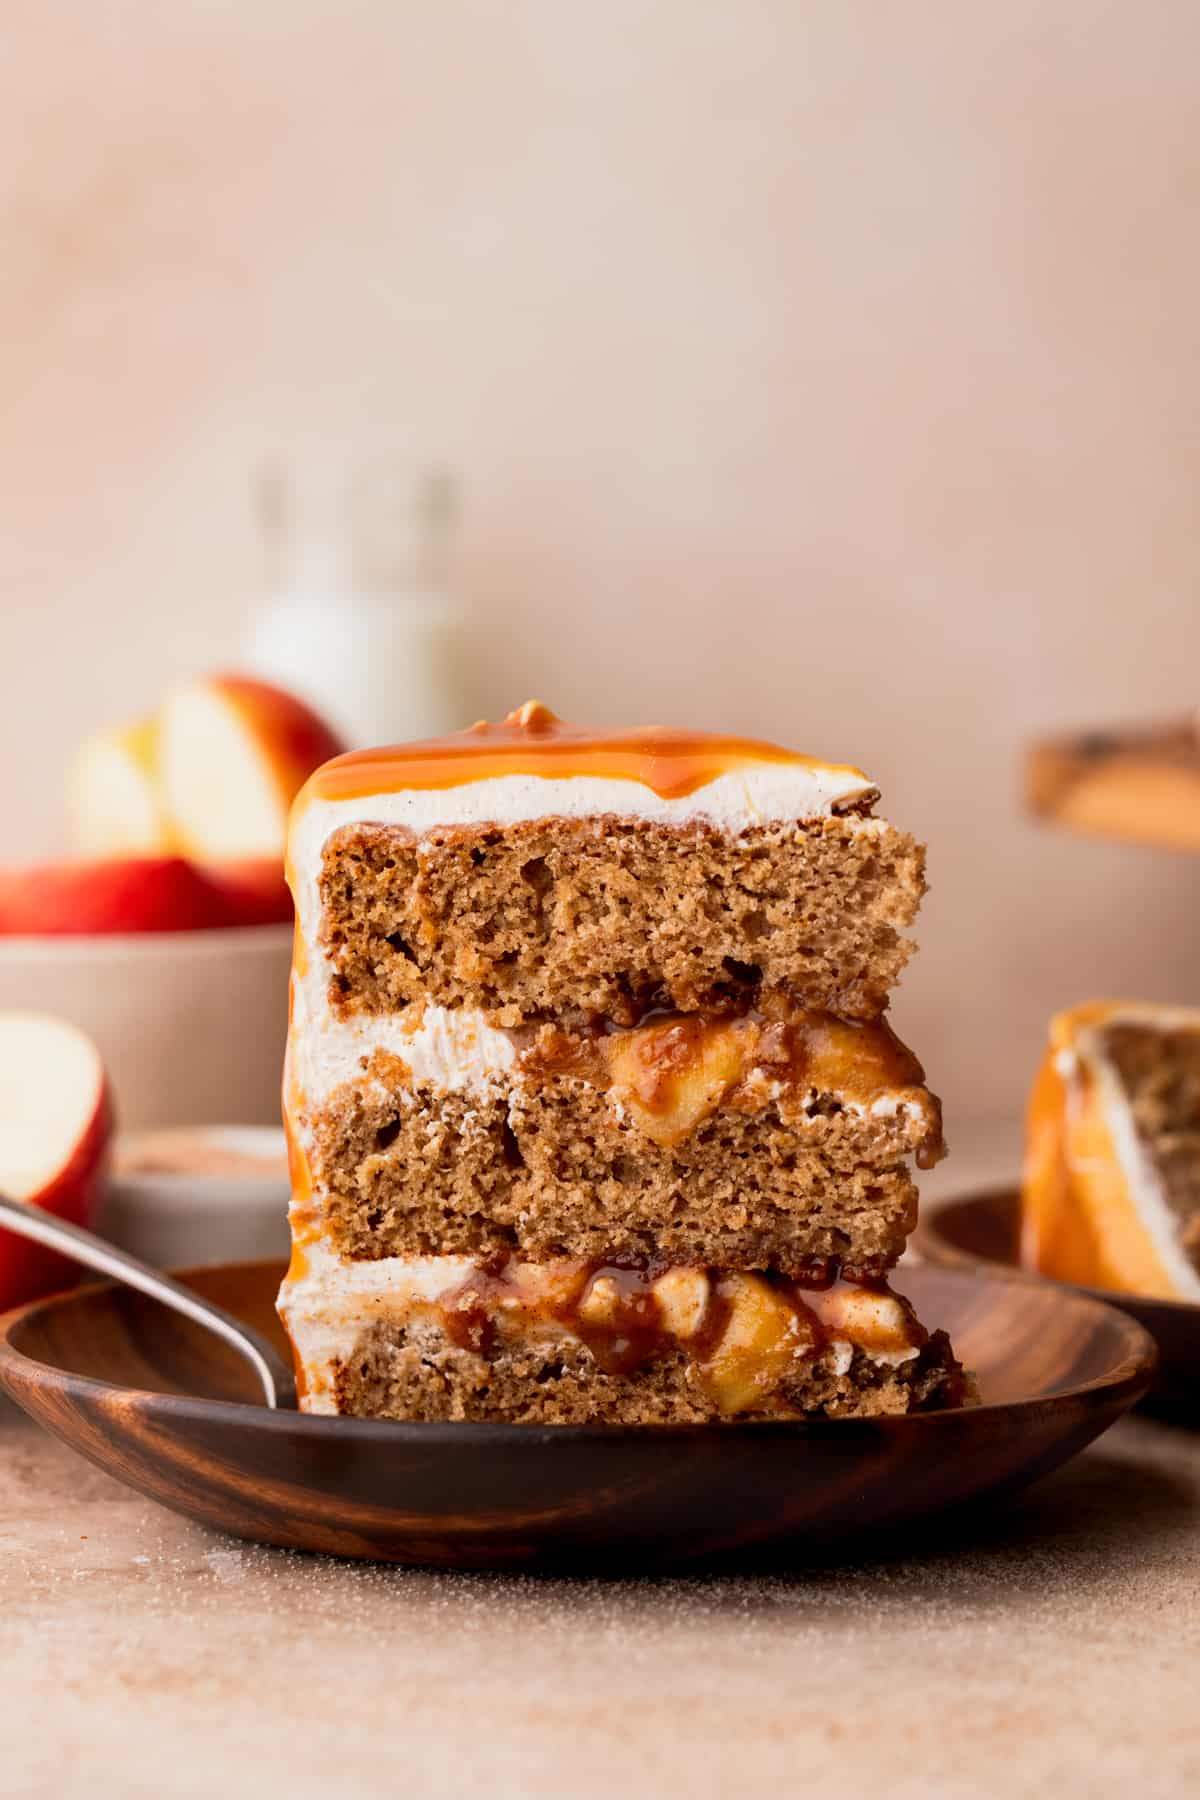 One apple cinnamon cake slice standing on the plate.